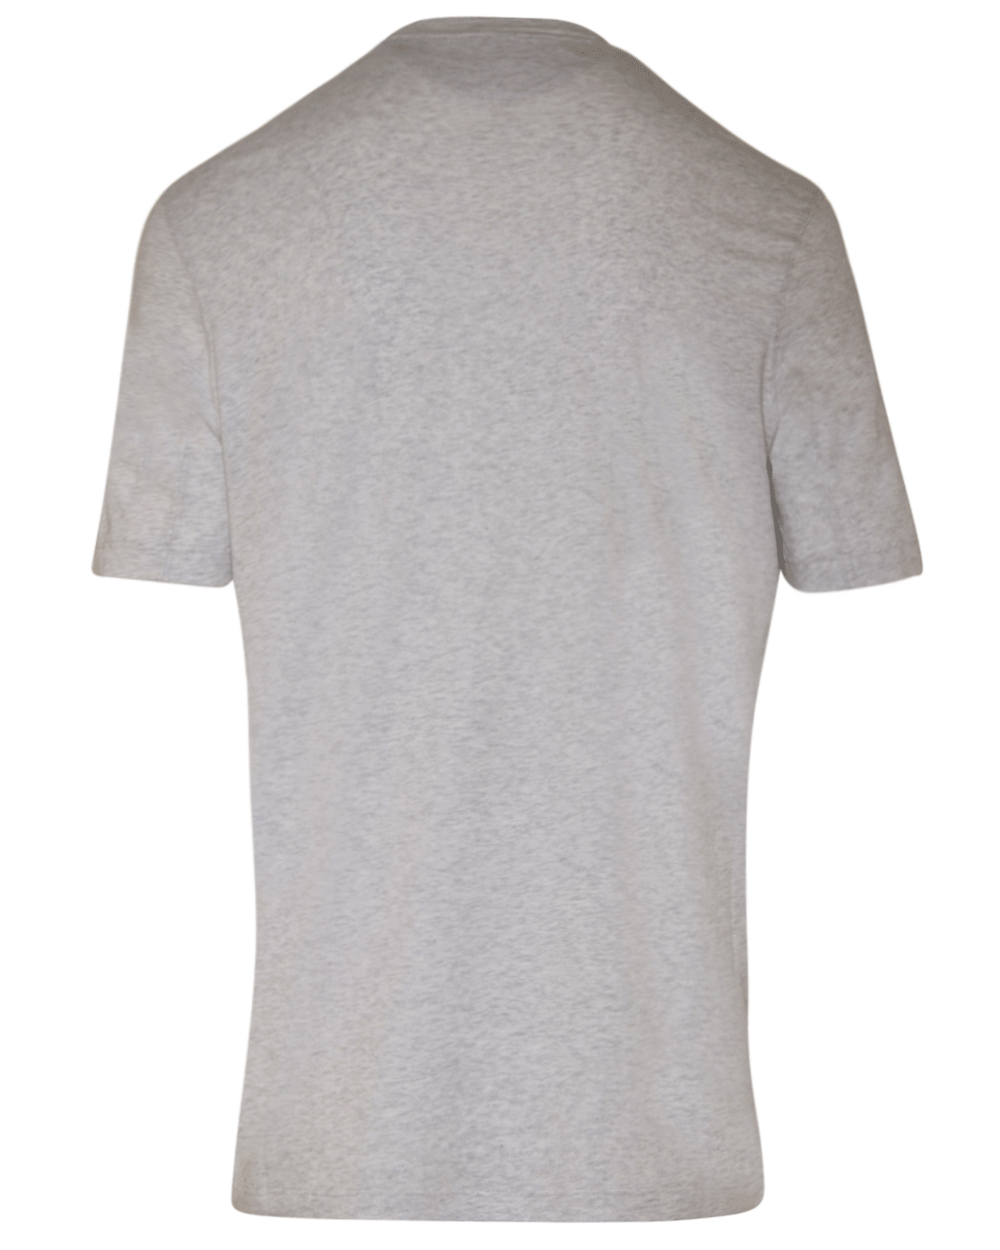 Pearl Cotton T-Shirt